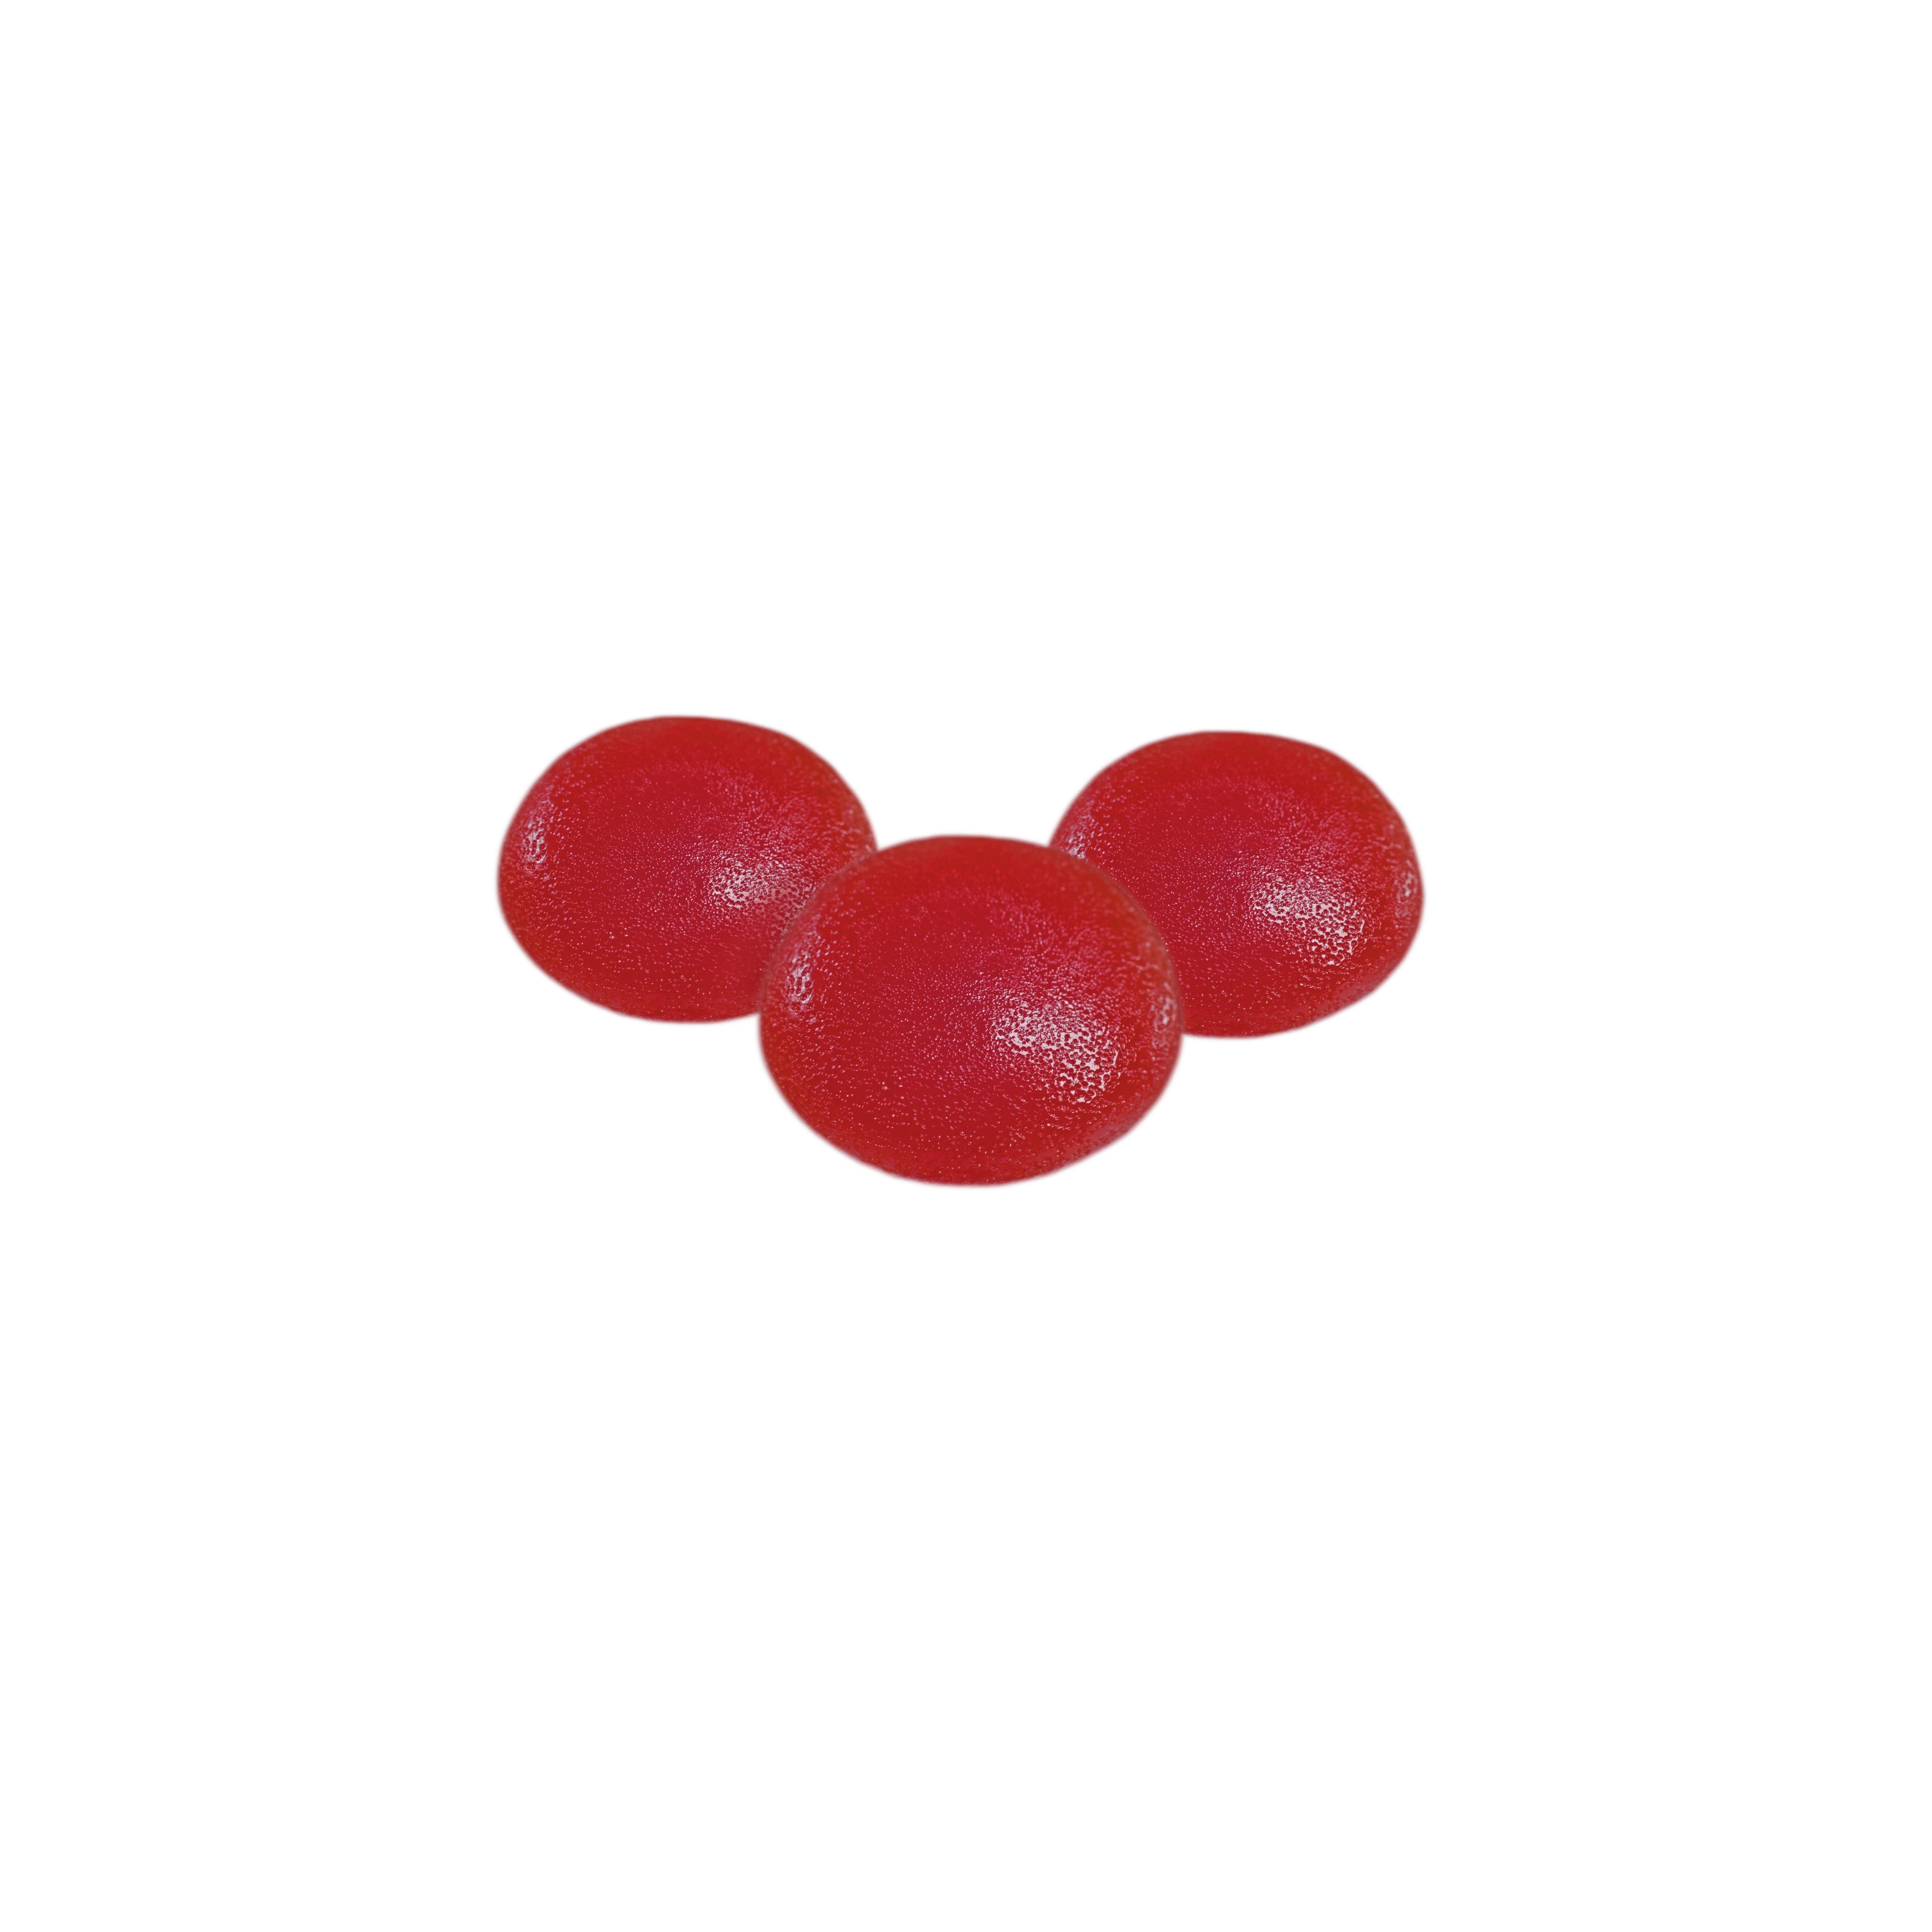 Fruit Drops - Raspberry 5 Pack